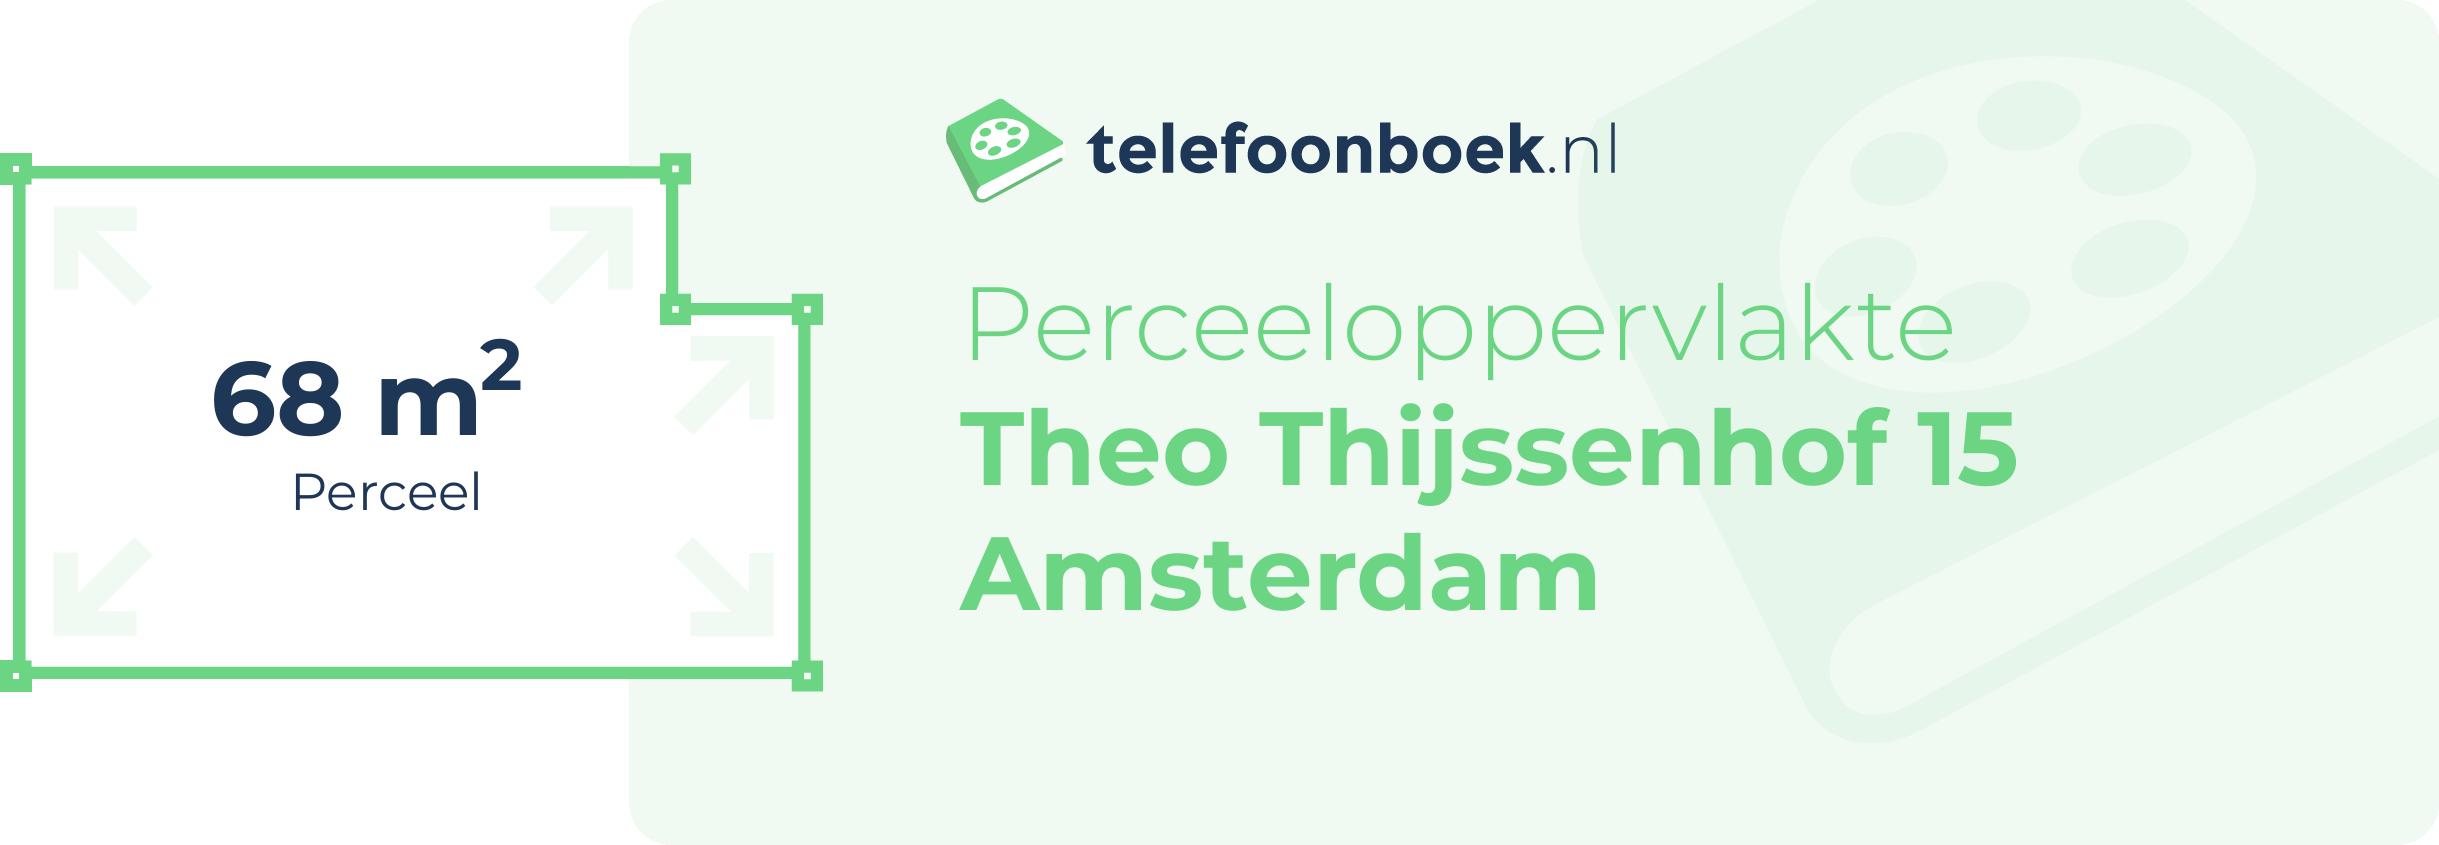 Perceeloppervlakte Theo Thijssenhof 15 Amsterdam